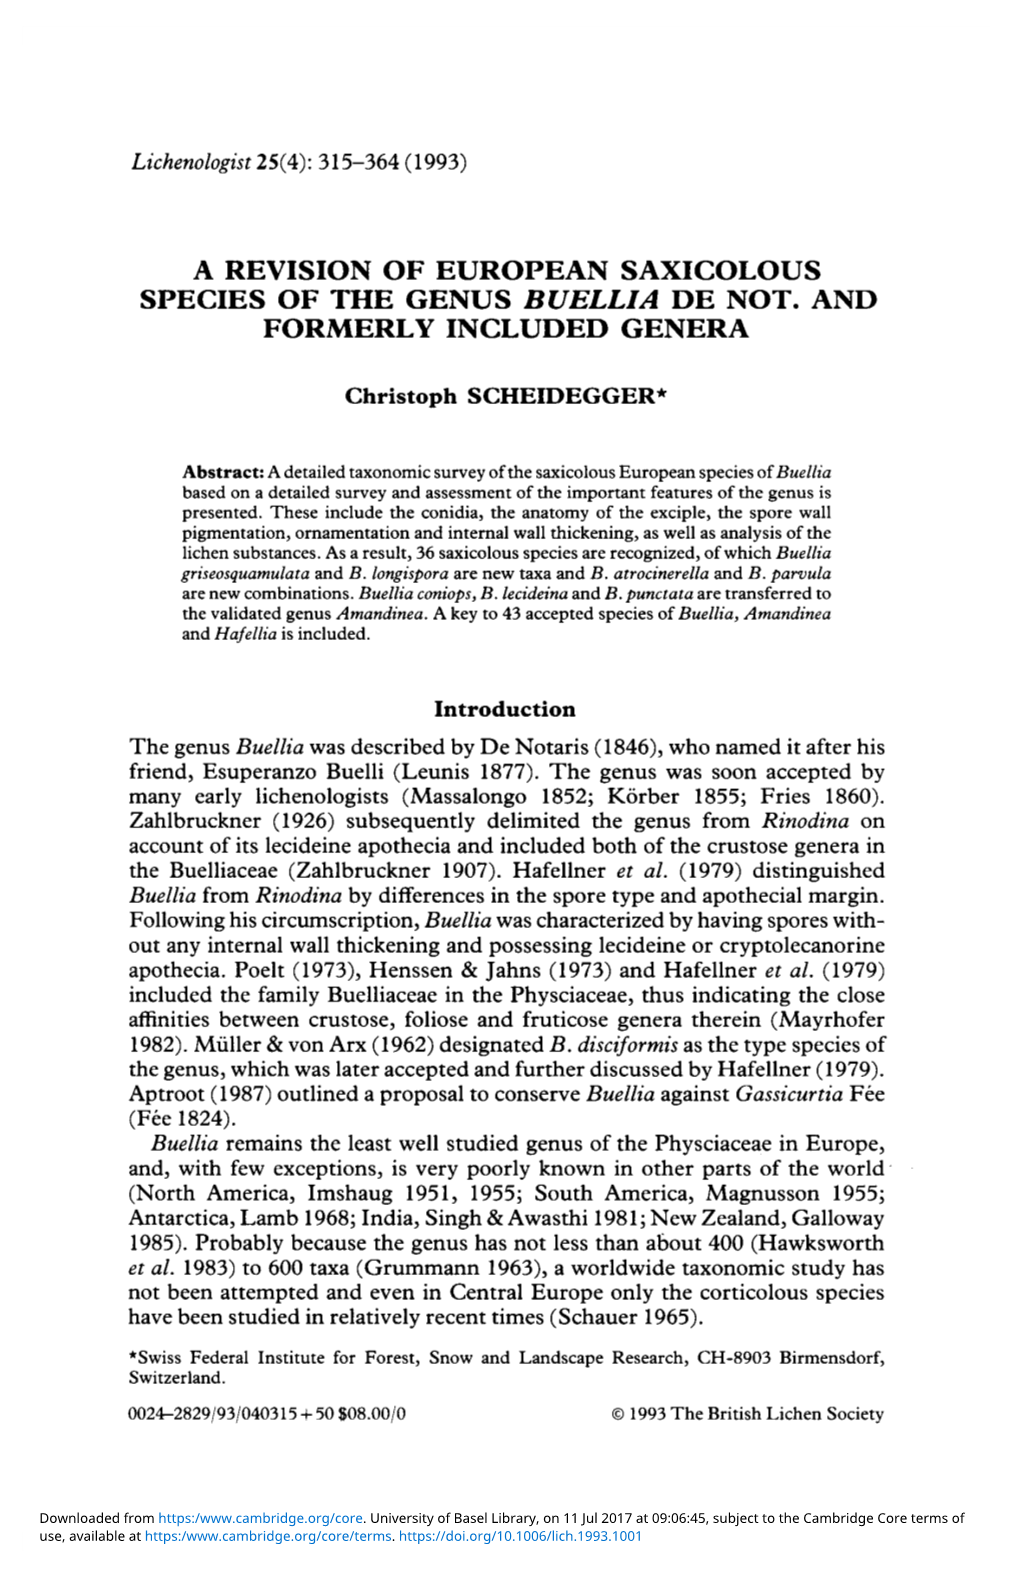 A Revision of European Saxicolous Species of the Genus Buellia De Not